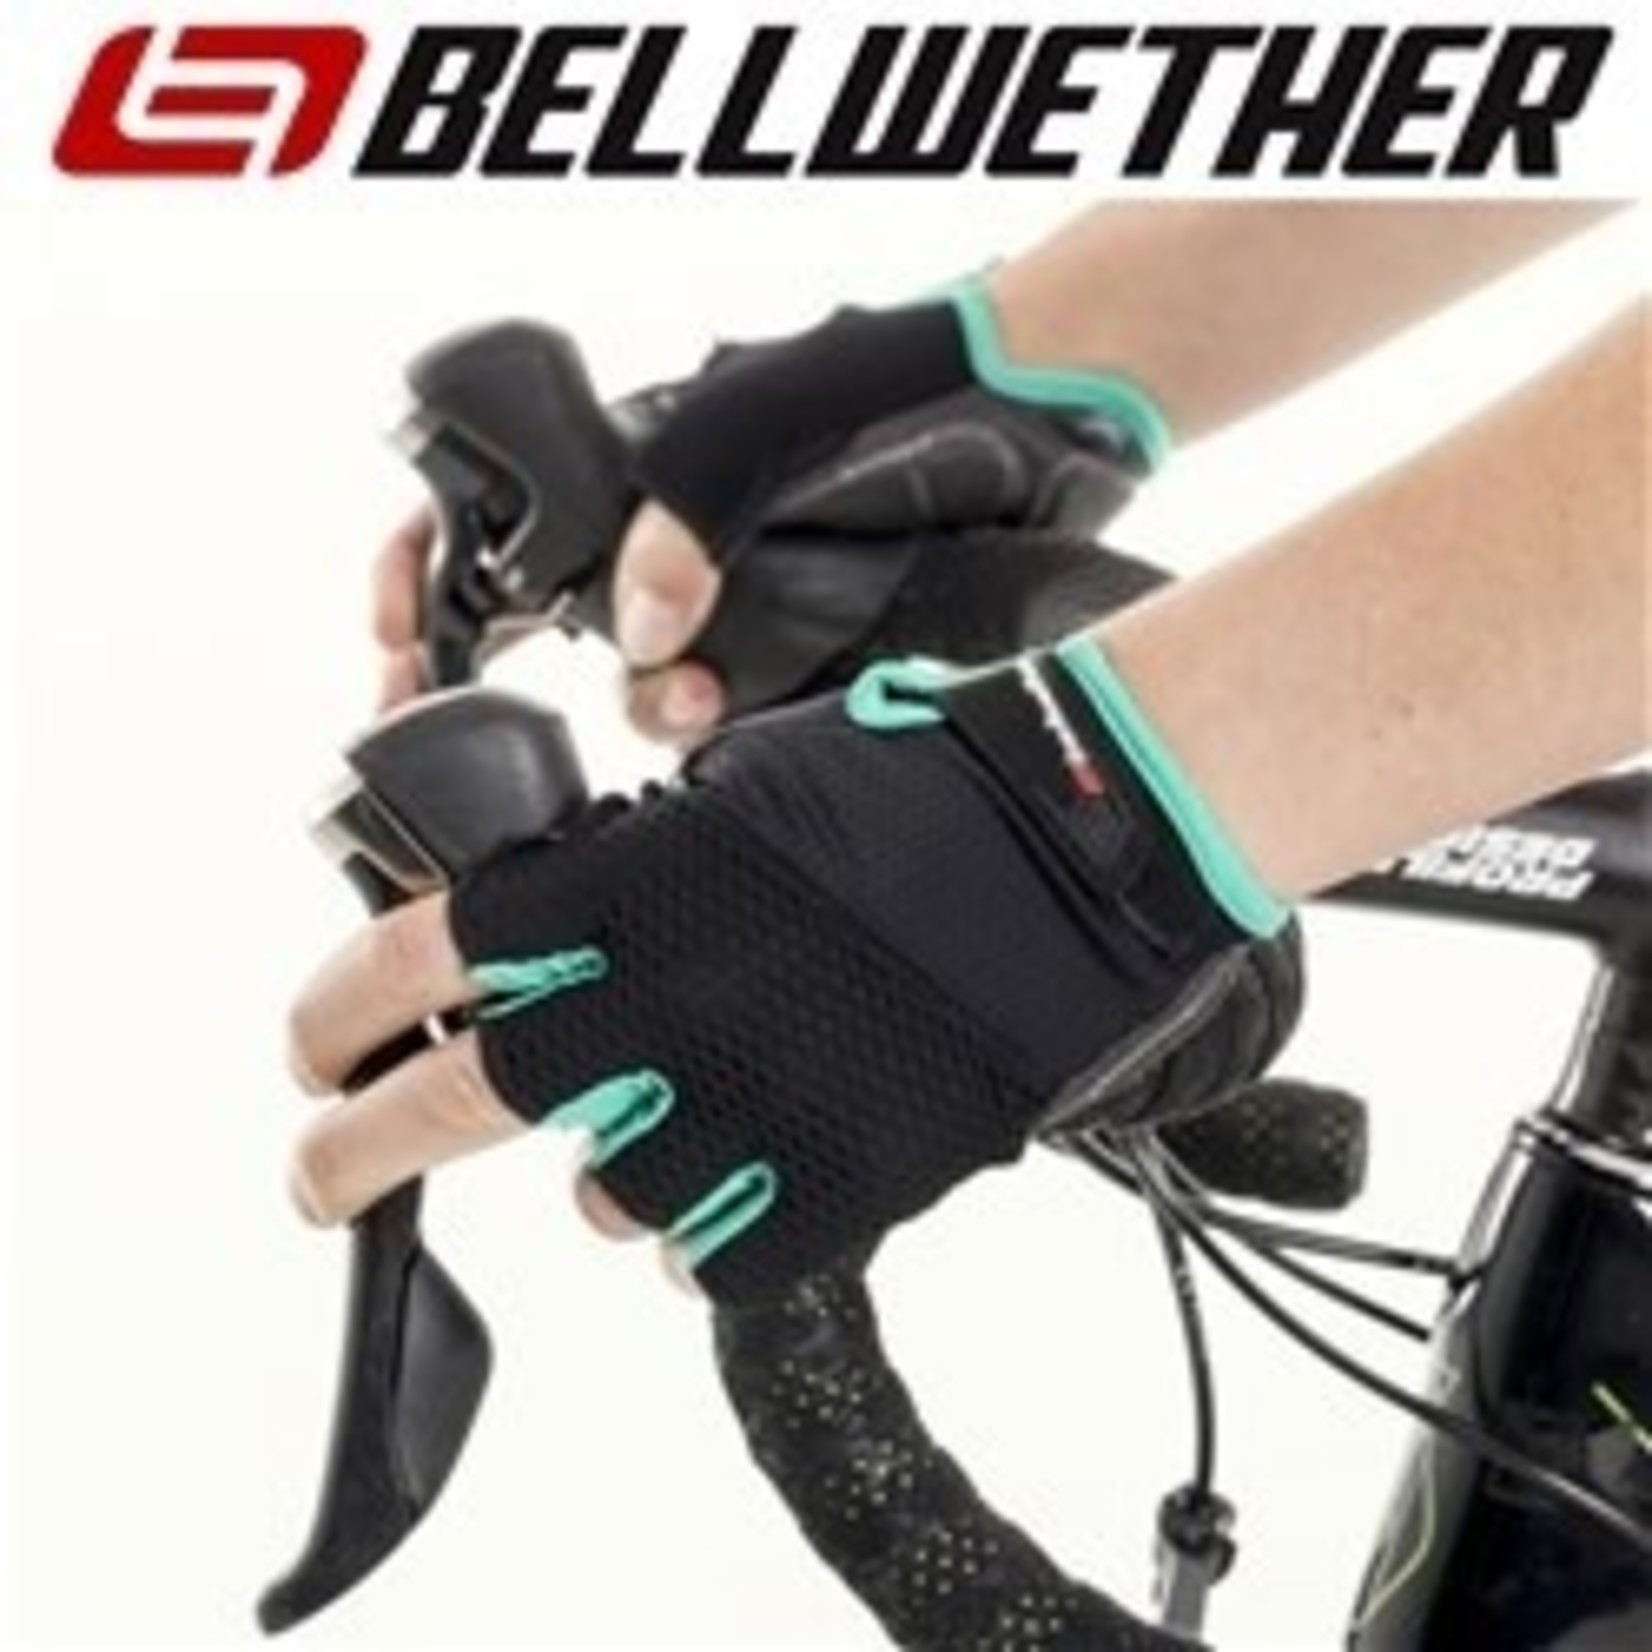 Bellwether Bellwether Cycling/Bike Gloves - Amara Palm - Women's Gel Supreme - Aqua